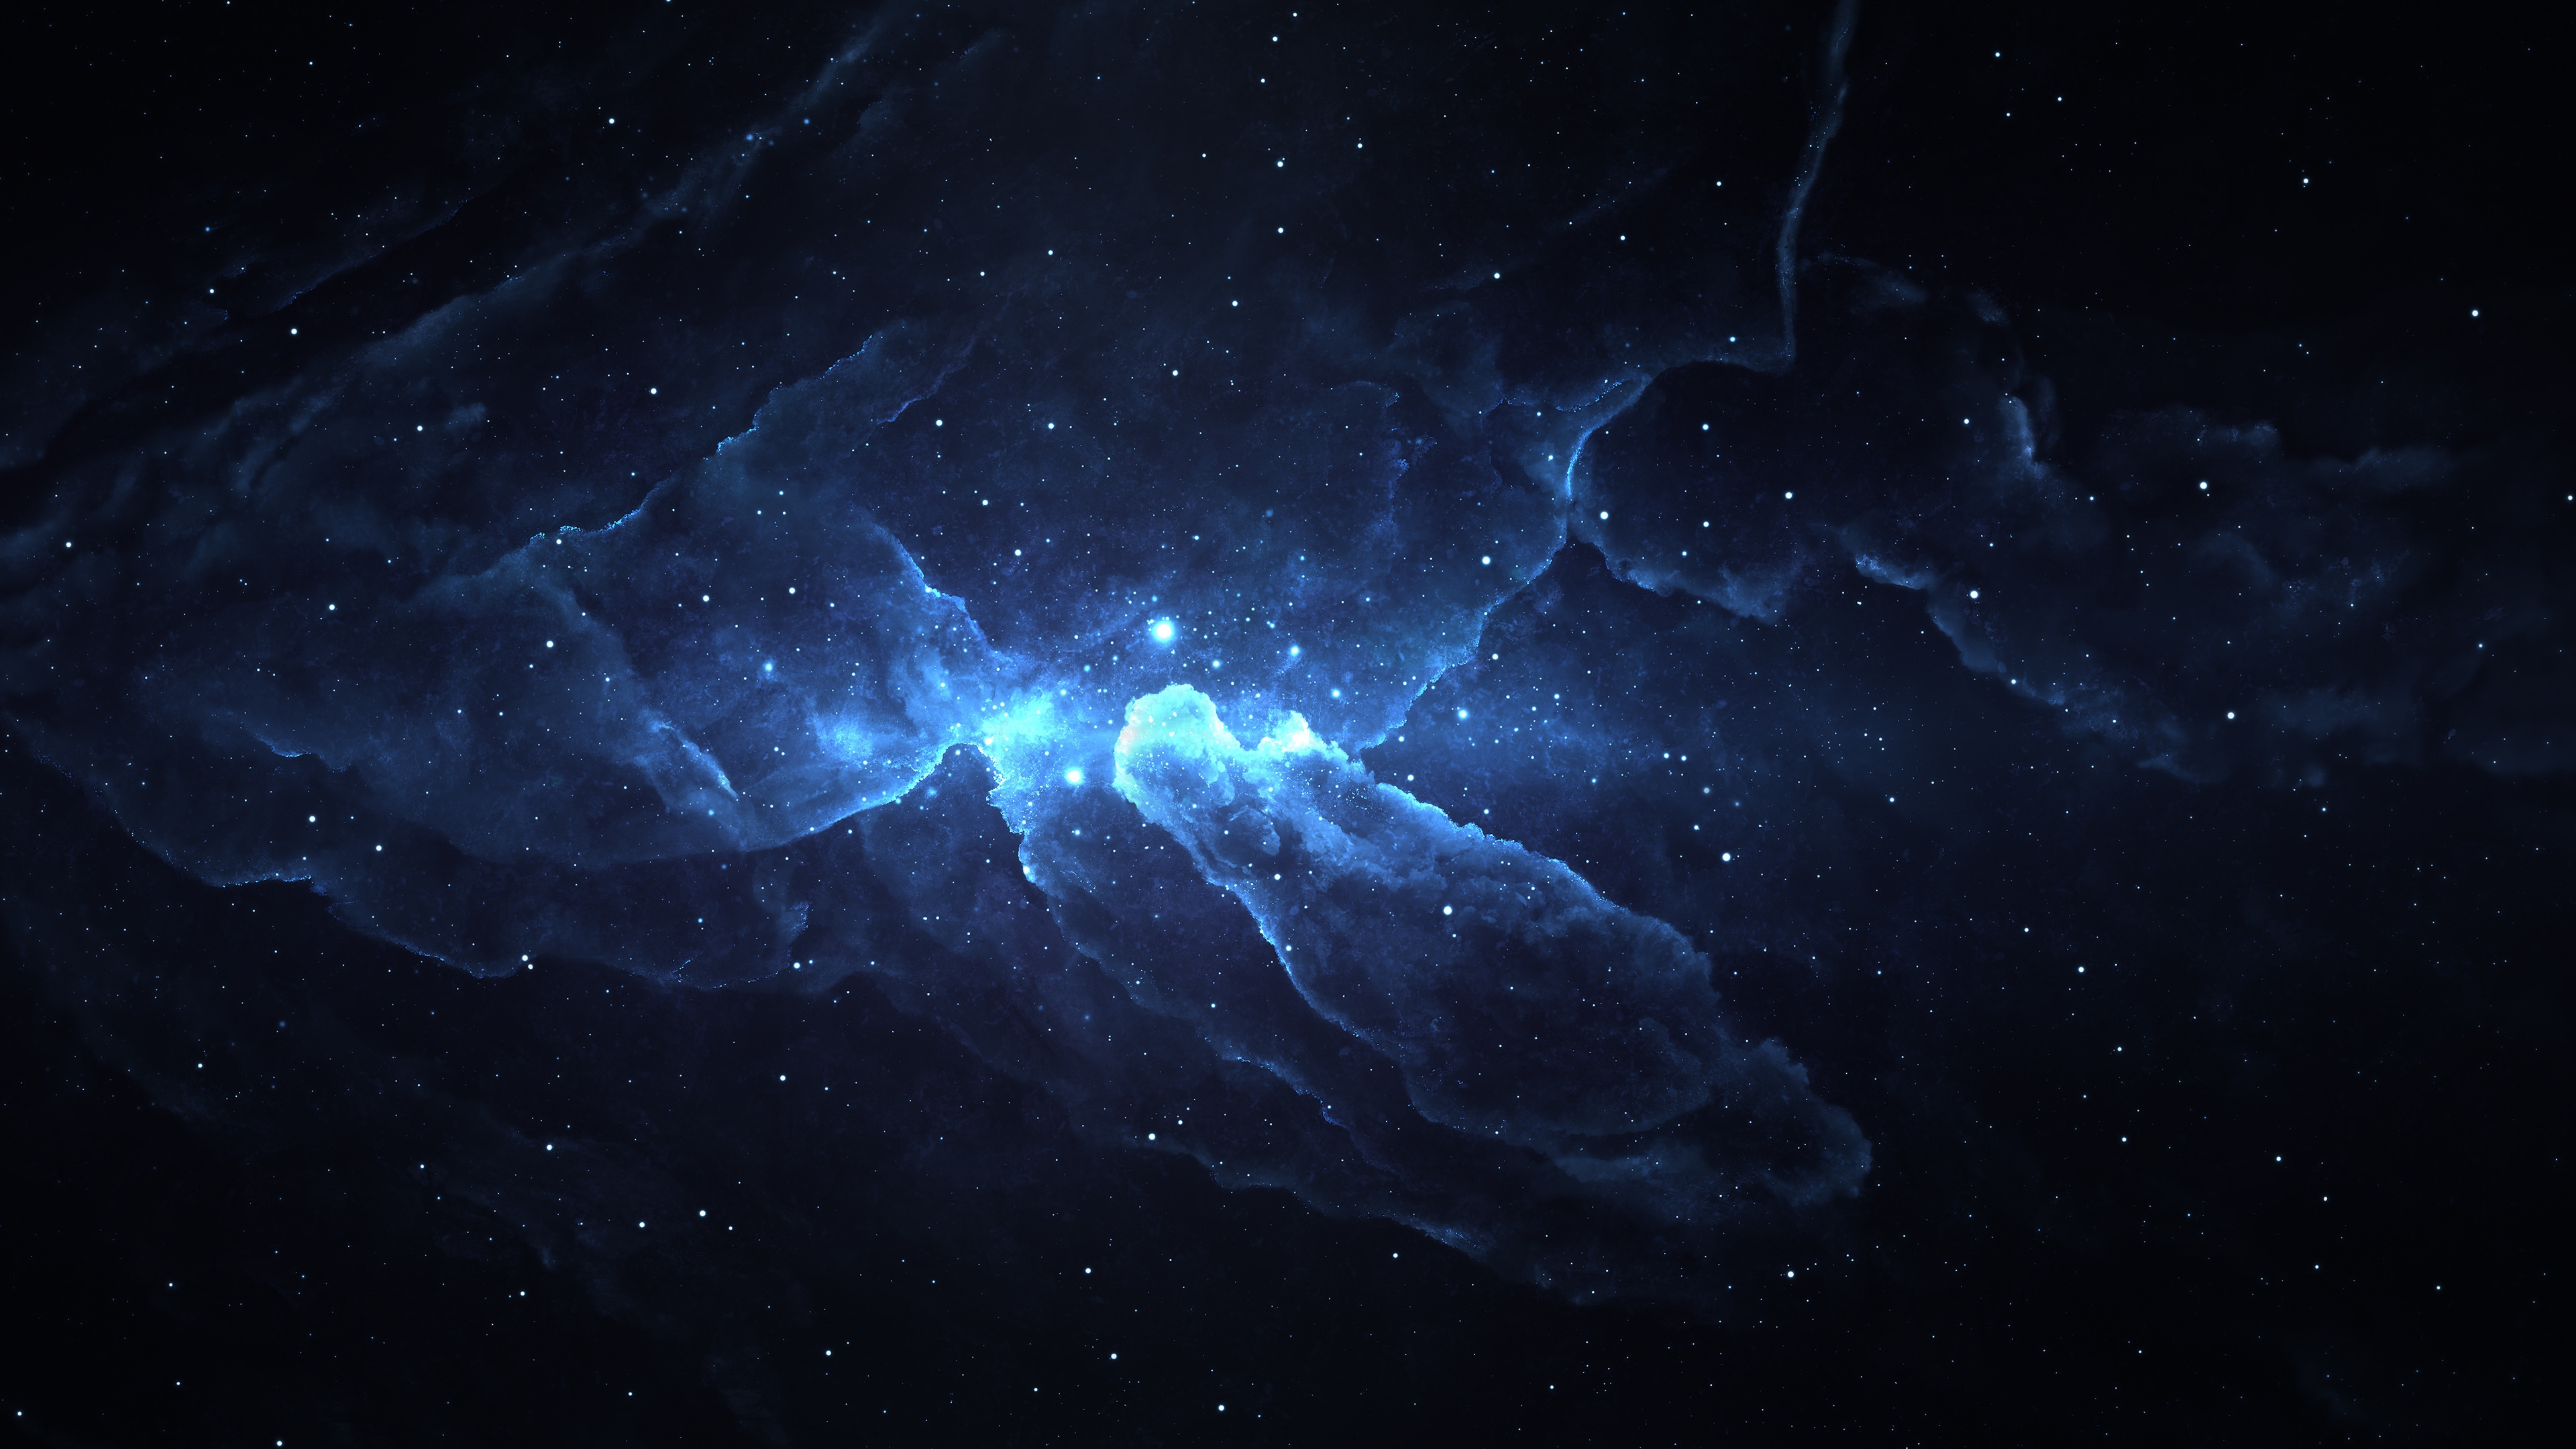 Atlantis Nebula 4 for 3840 x 2160 Ultra HD resolution